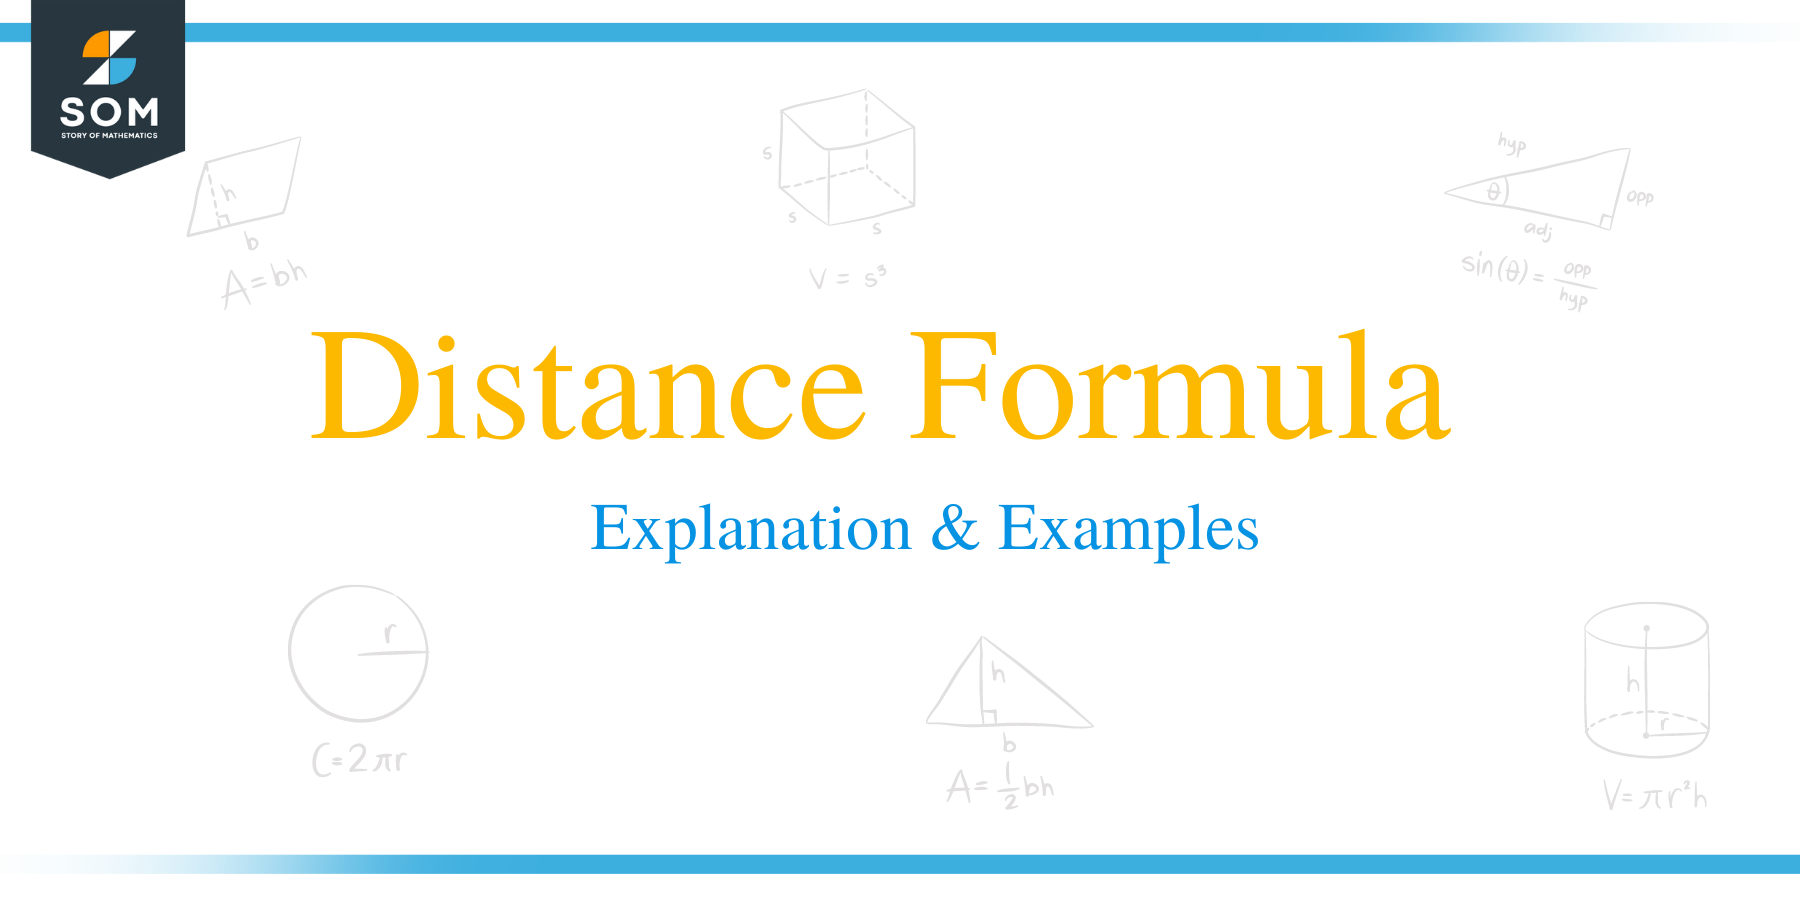 Distance Formula